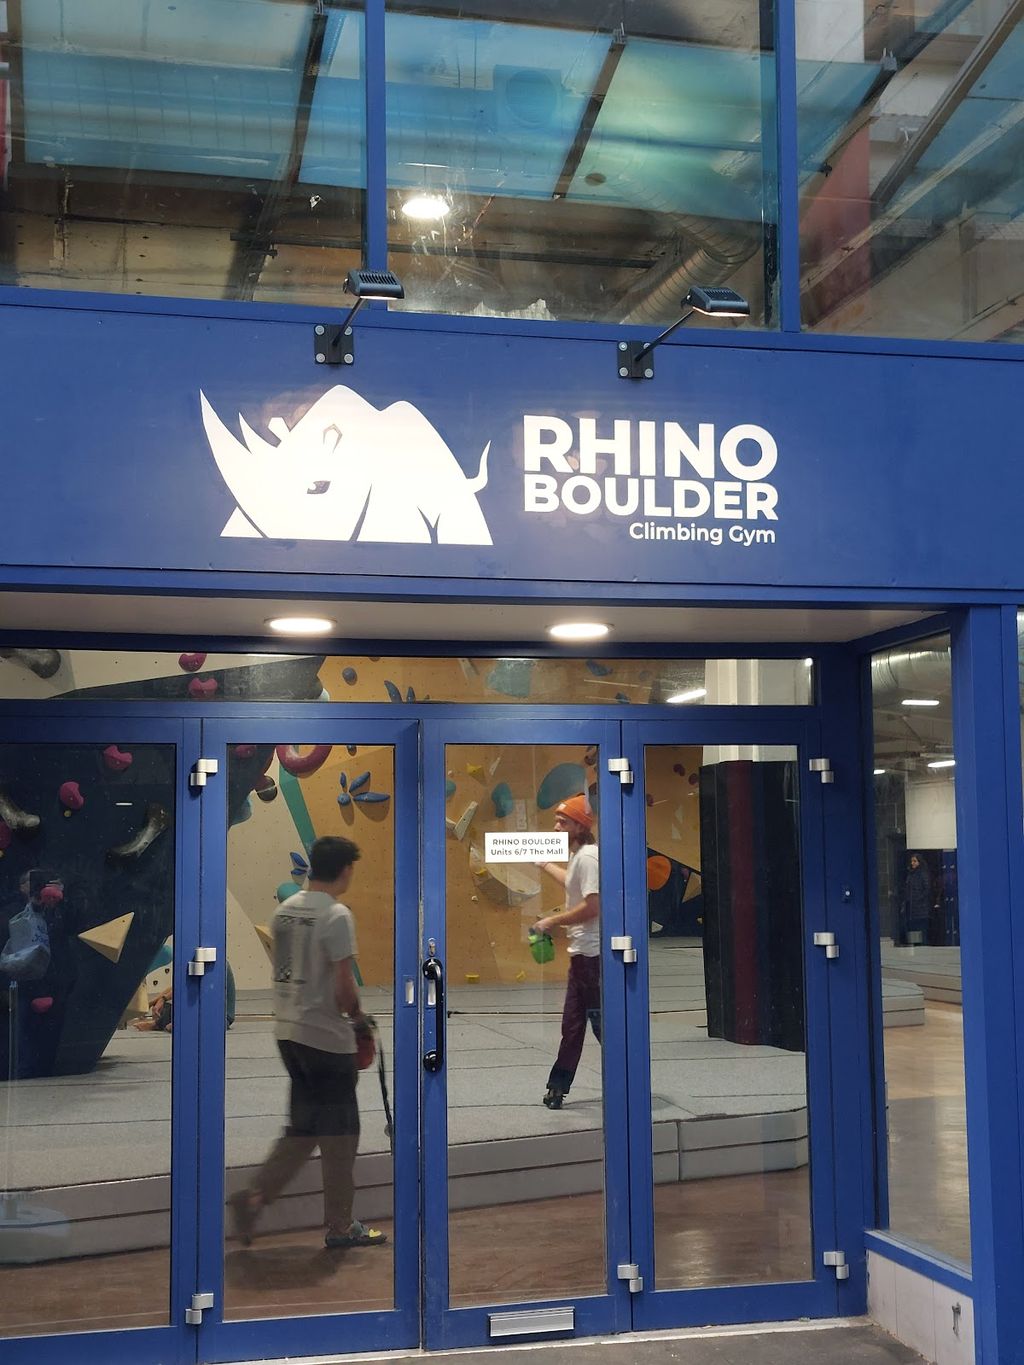 Rhino Boulder